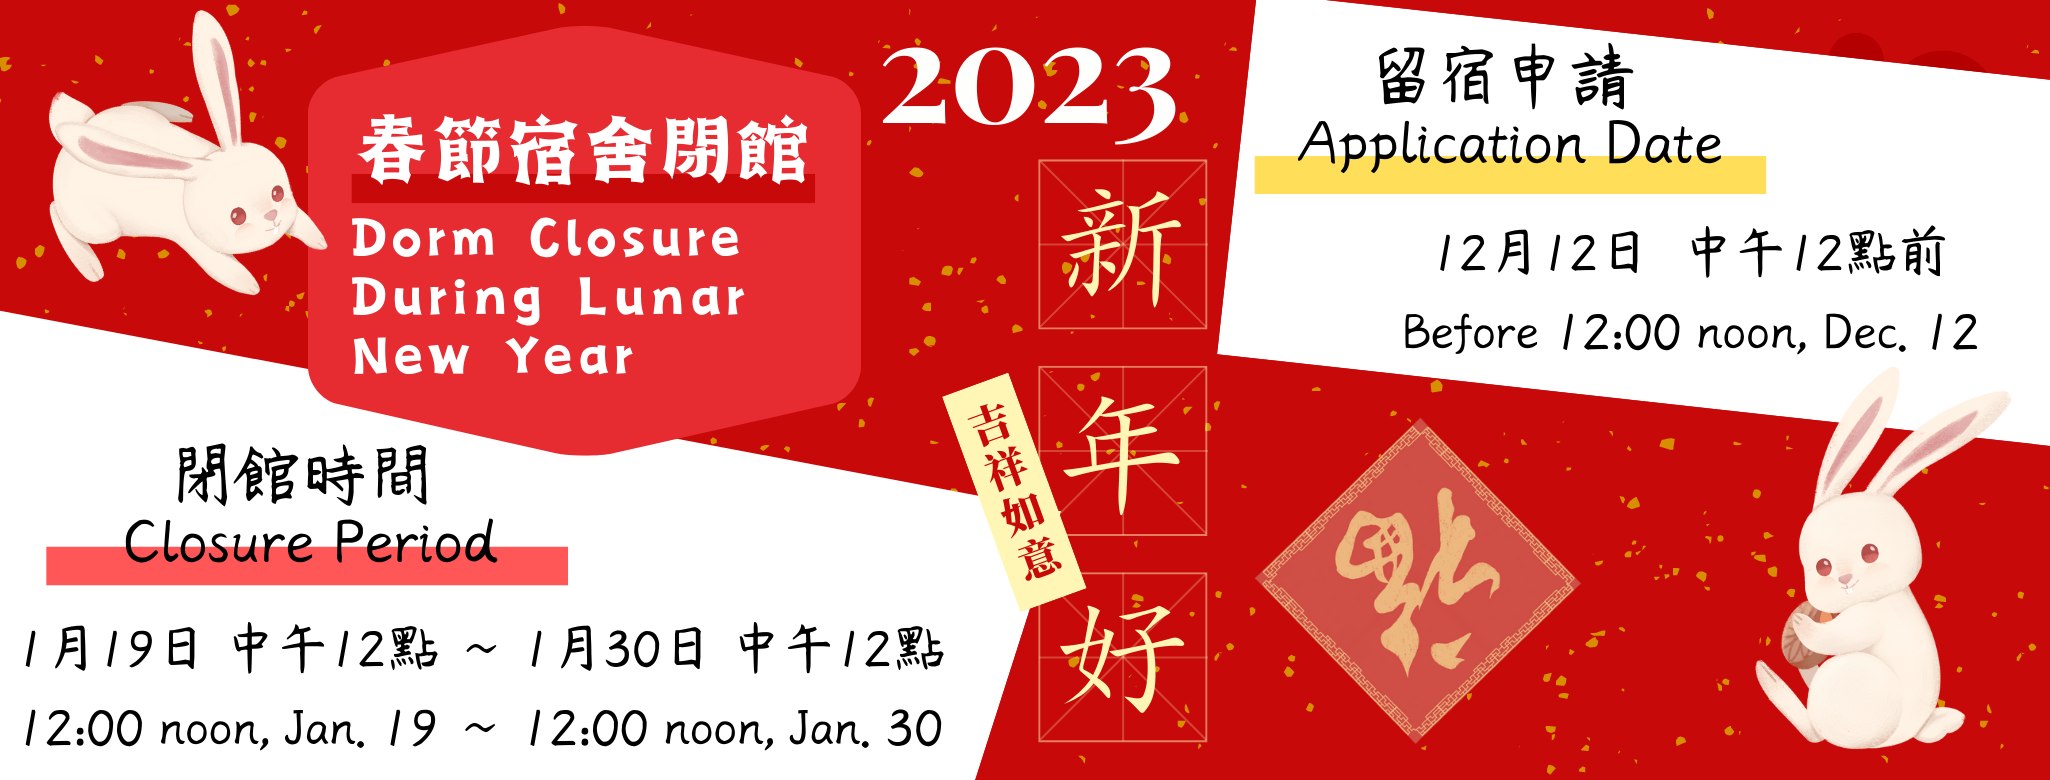 Dorm Closure during Chinese New Year 2023